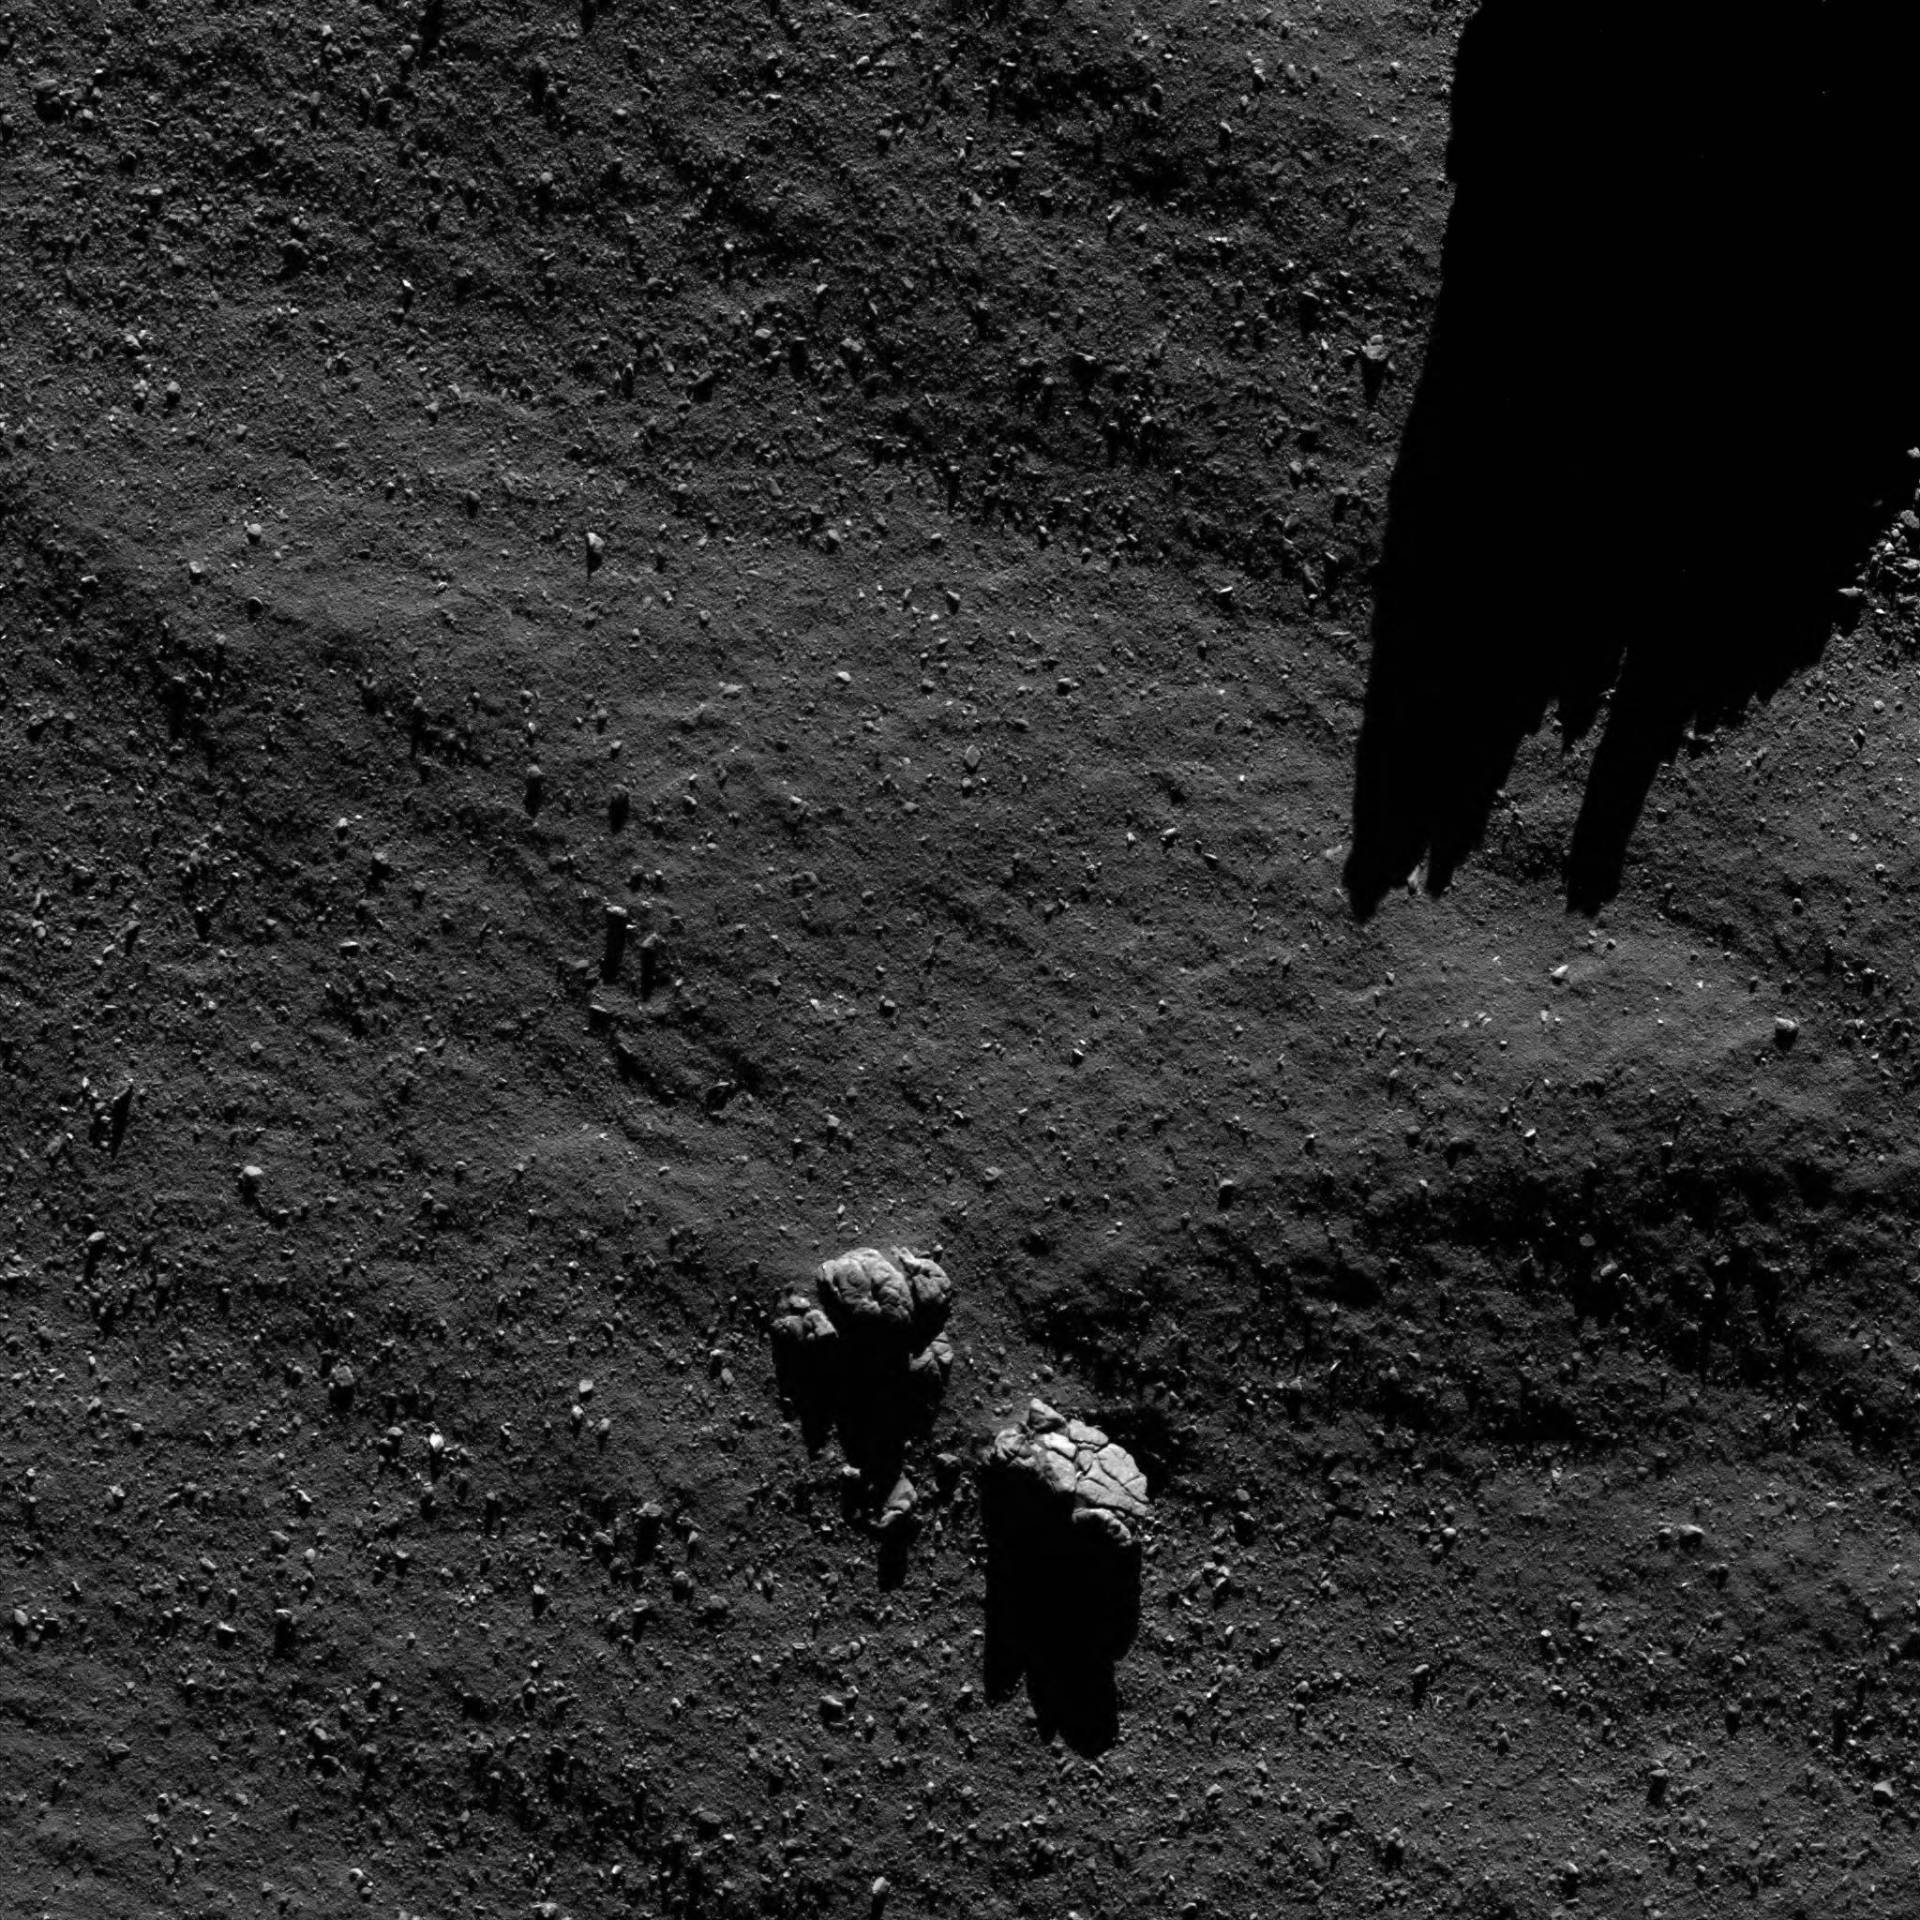 Superficie del cometa a sólo 4 km de altura.